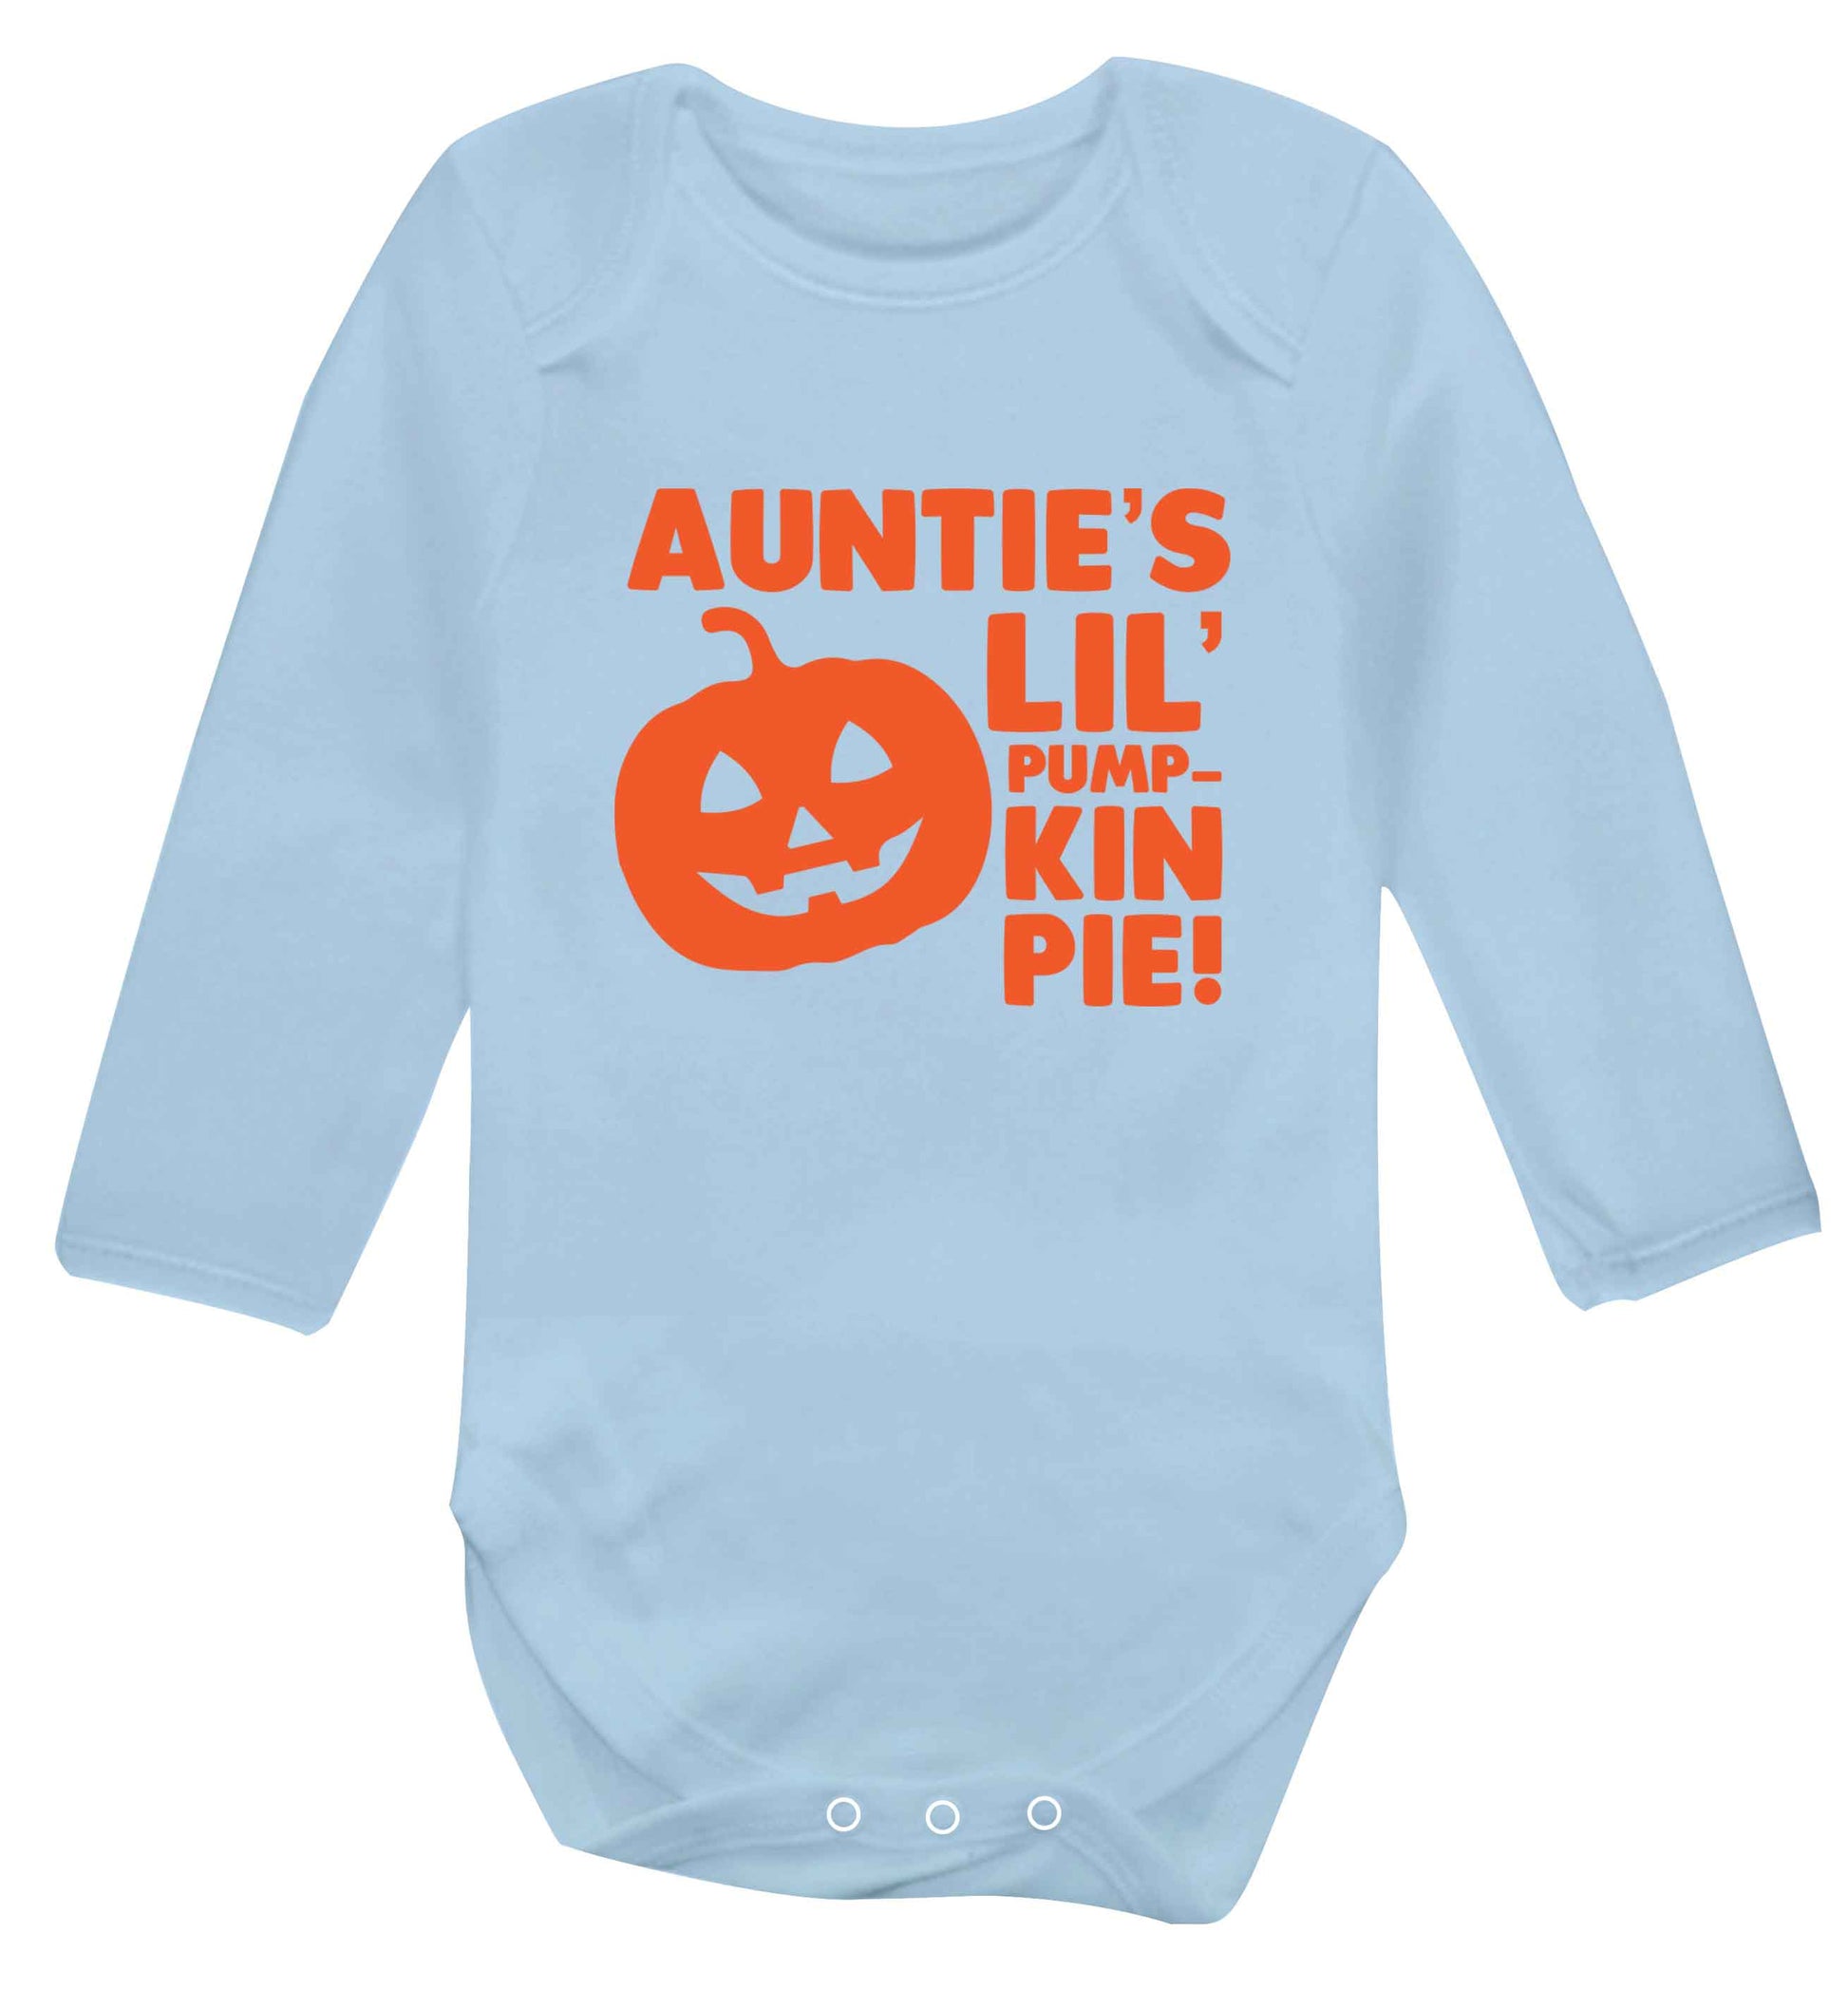 Auntie's lil' pumpkin pie baby vest long sleeved pale blue 6-12 months